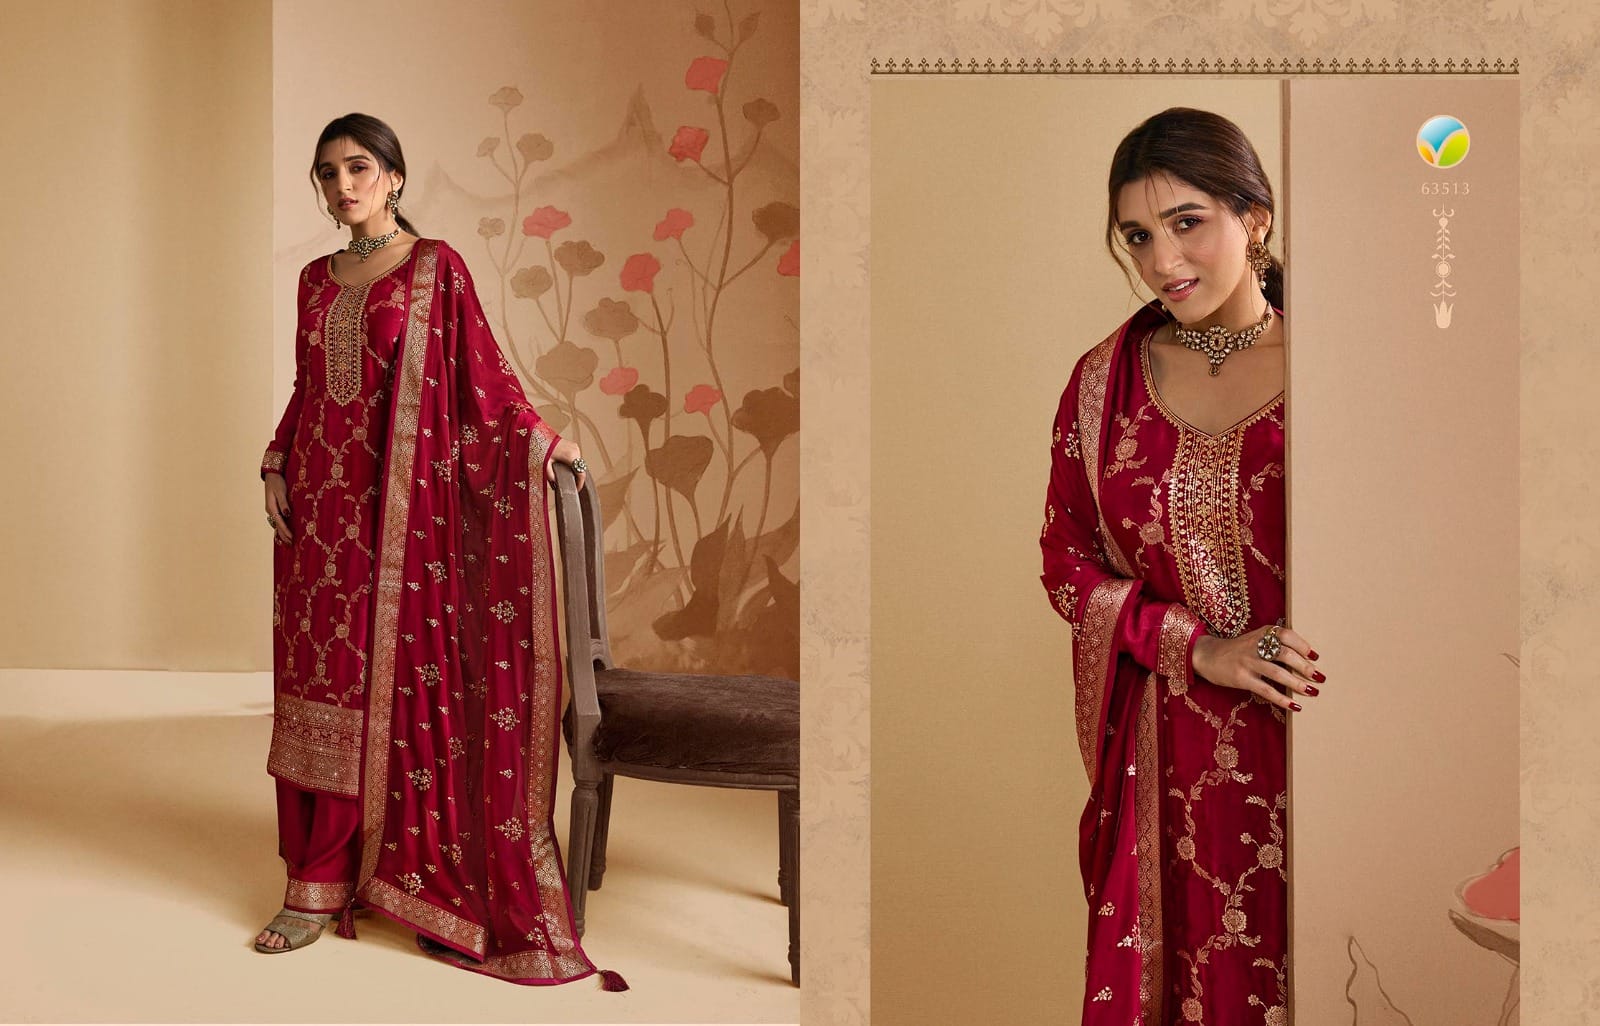 vinay fashion kaseesh sana 2 dola jacouard innovative look salwar suit catalog